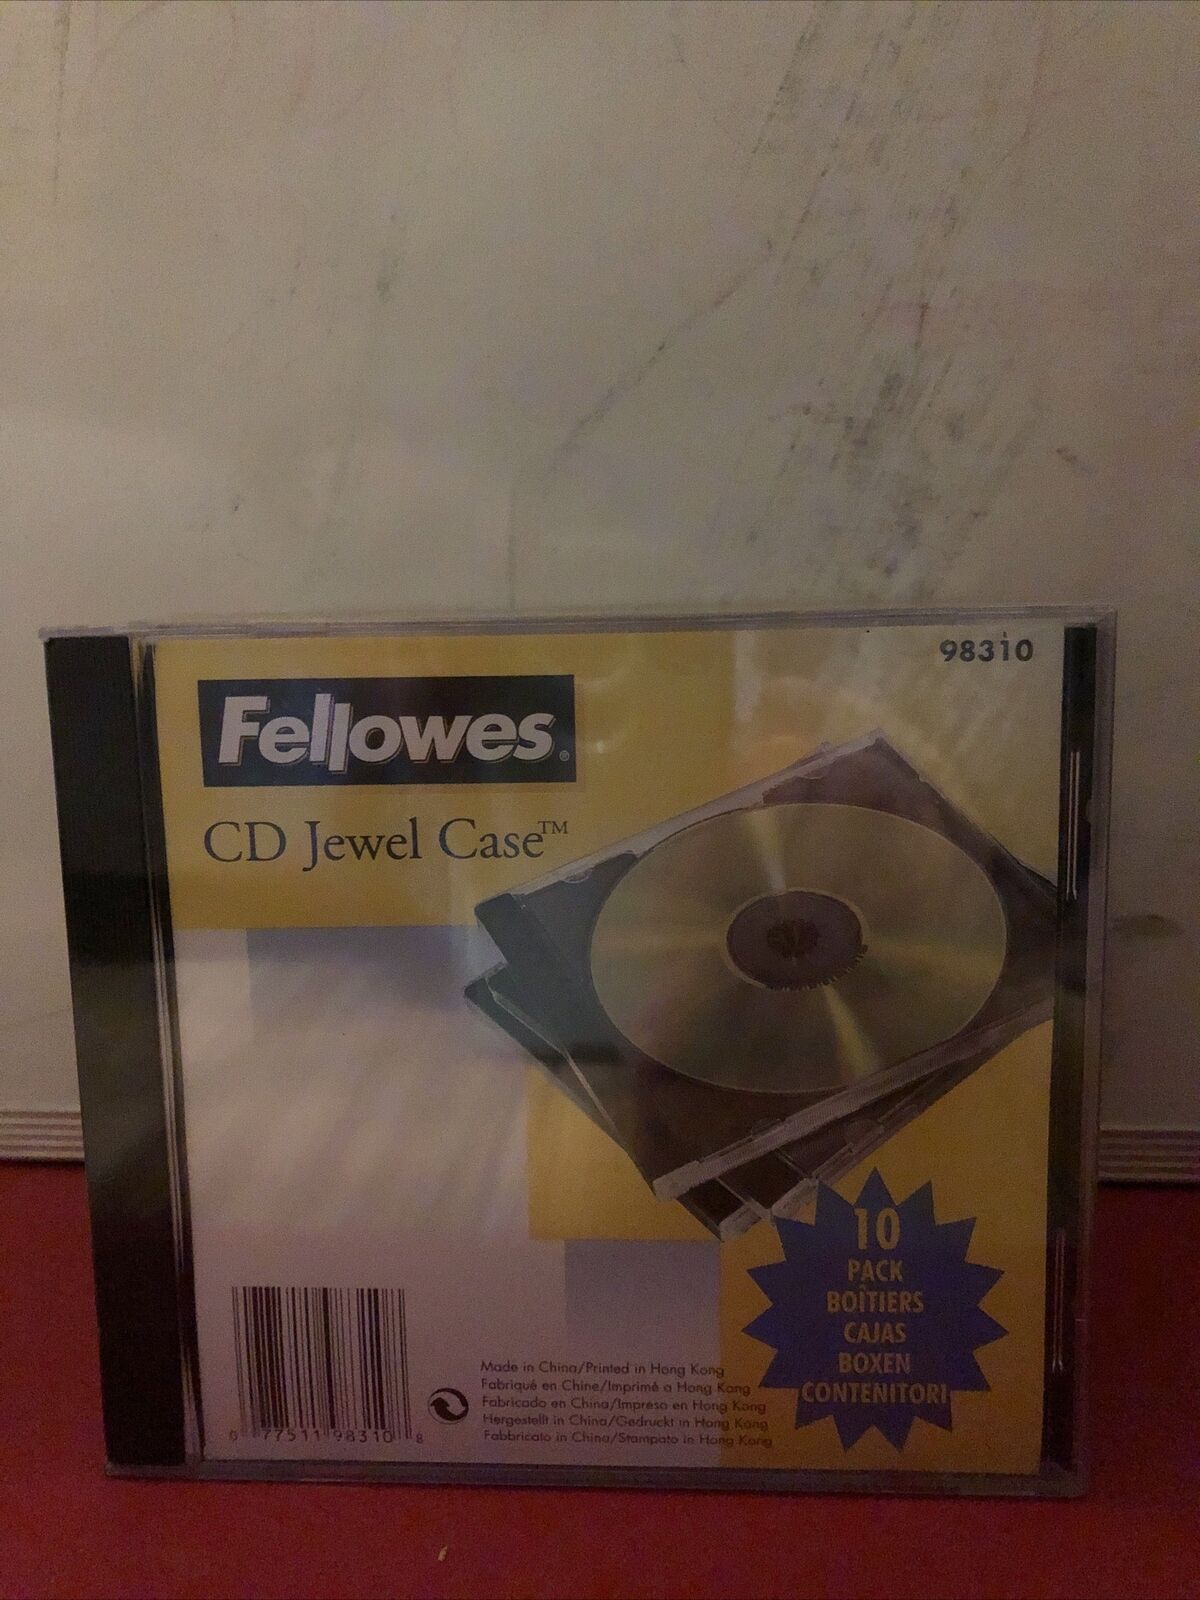 Brand new • 10 pack CD DVD 10.4 mm Jewel Case • Black Tray • Fellowes Brand